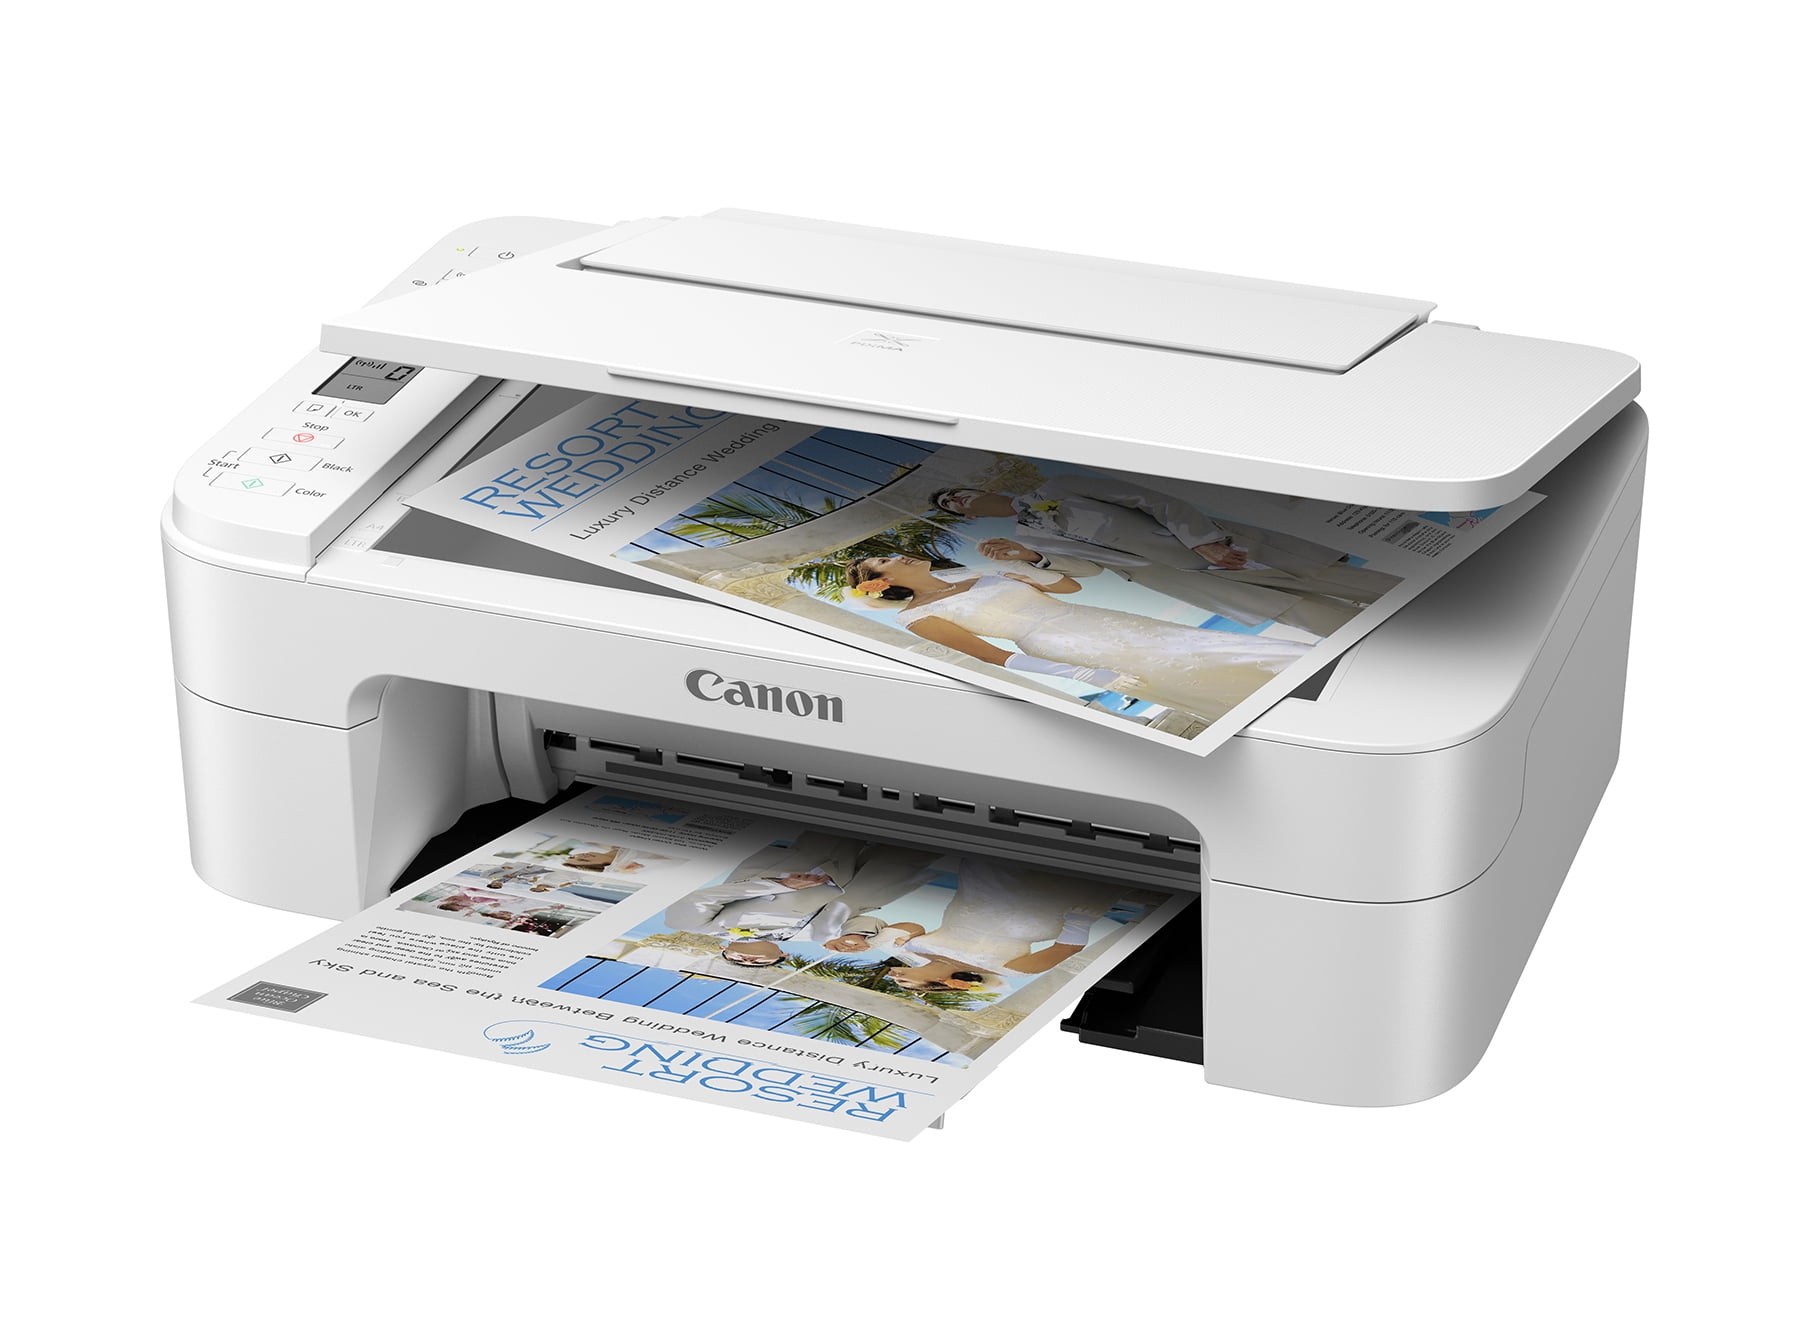 Canon Pixma TS3350 / TS3450 All-In-One Wireless Inkjet Printer - Black Copy  Scan